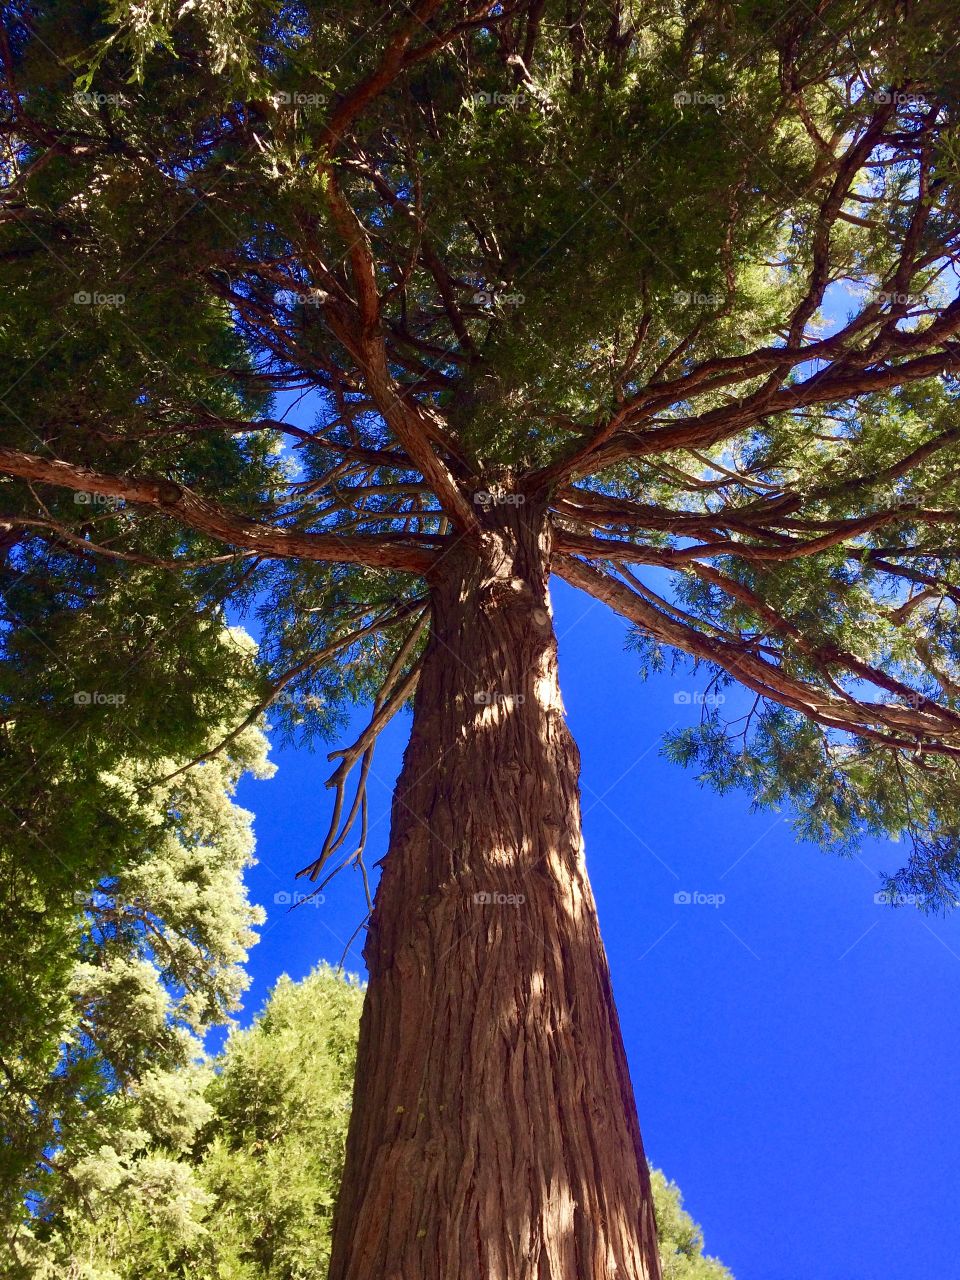 Granddaddy tree in Palomar